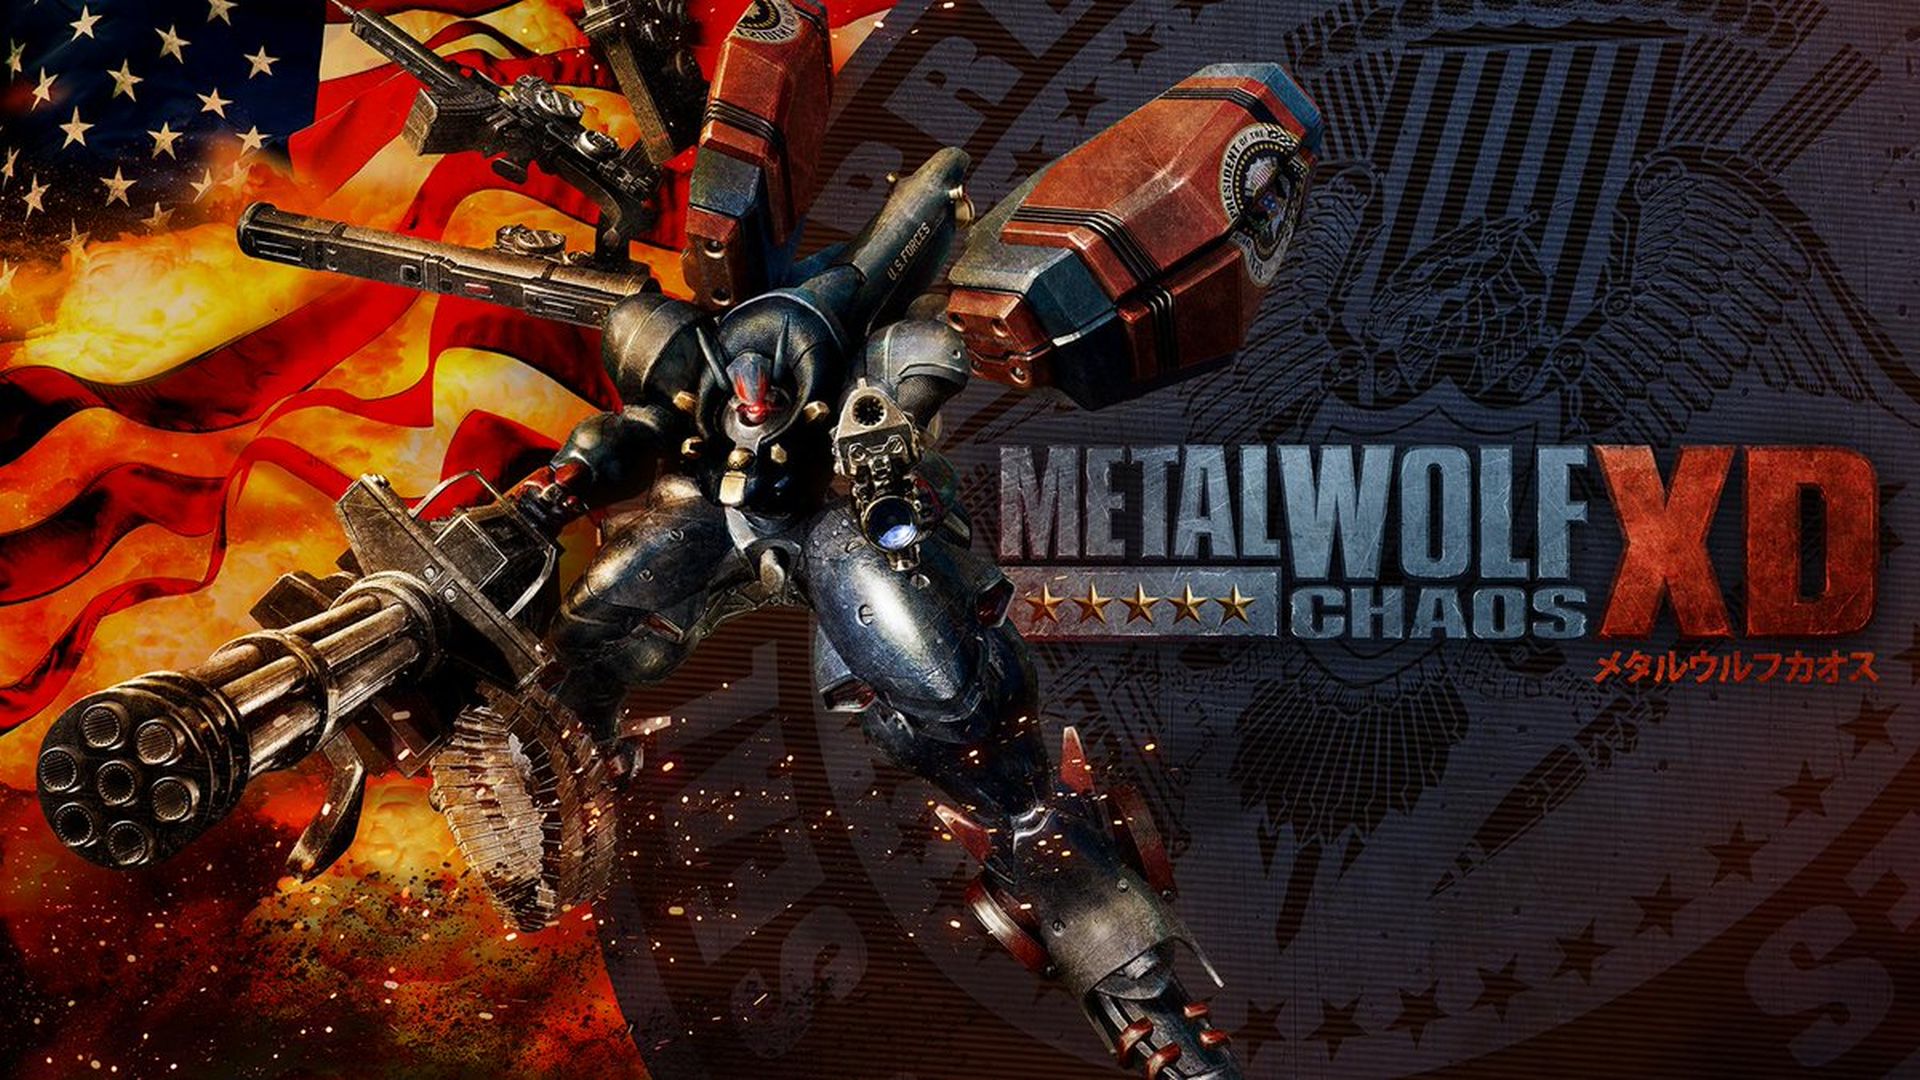 Metal Wolf Chaos XD เตรียมวางจำหน่าย 6 ส.ค. นี้